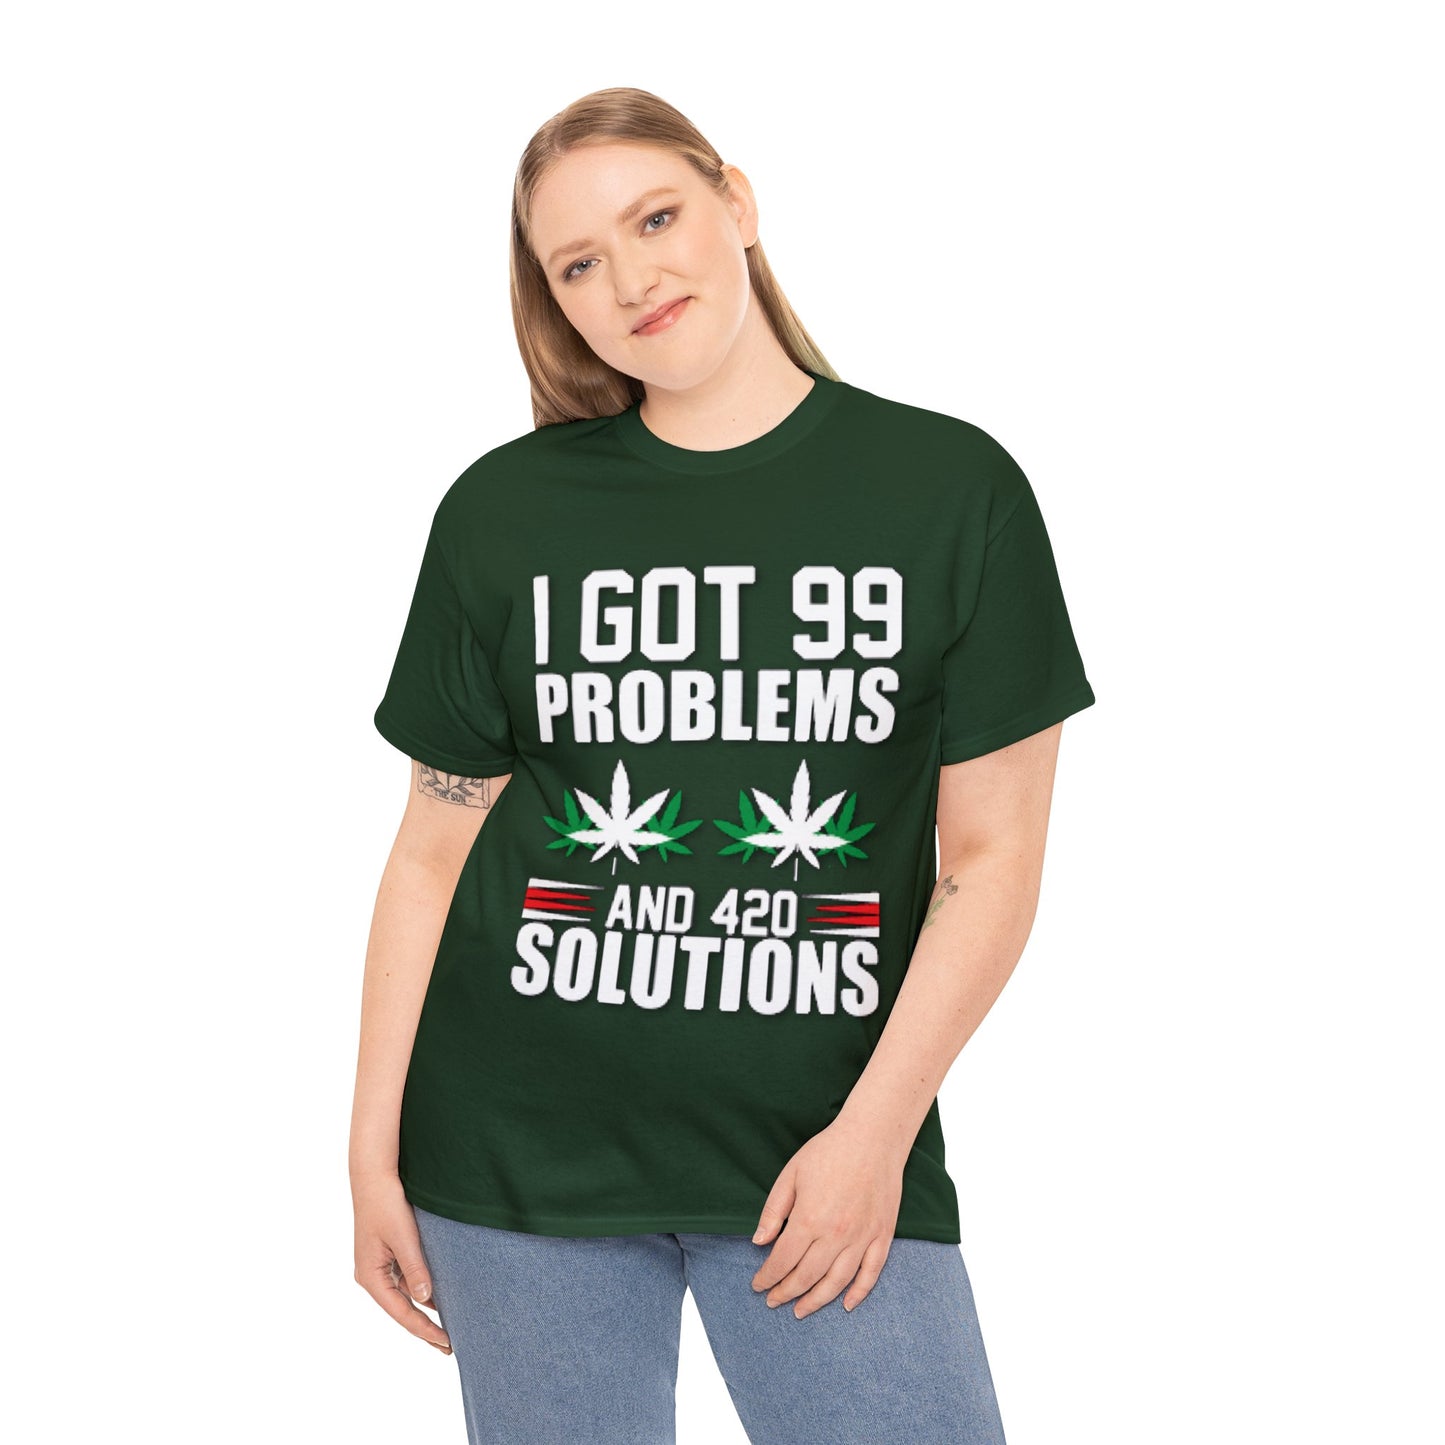 99 problems Tee